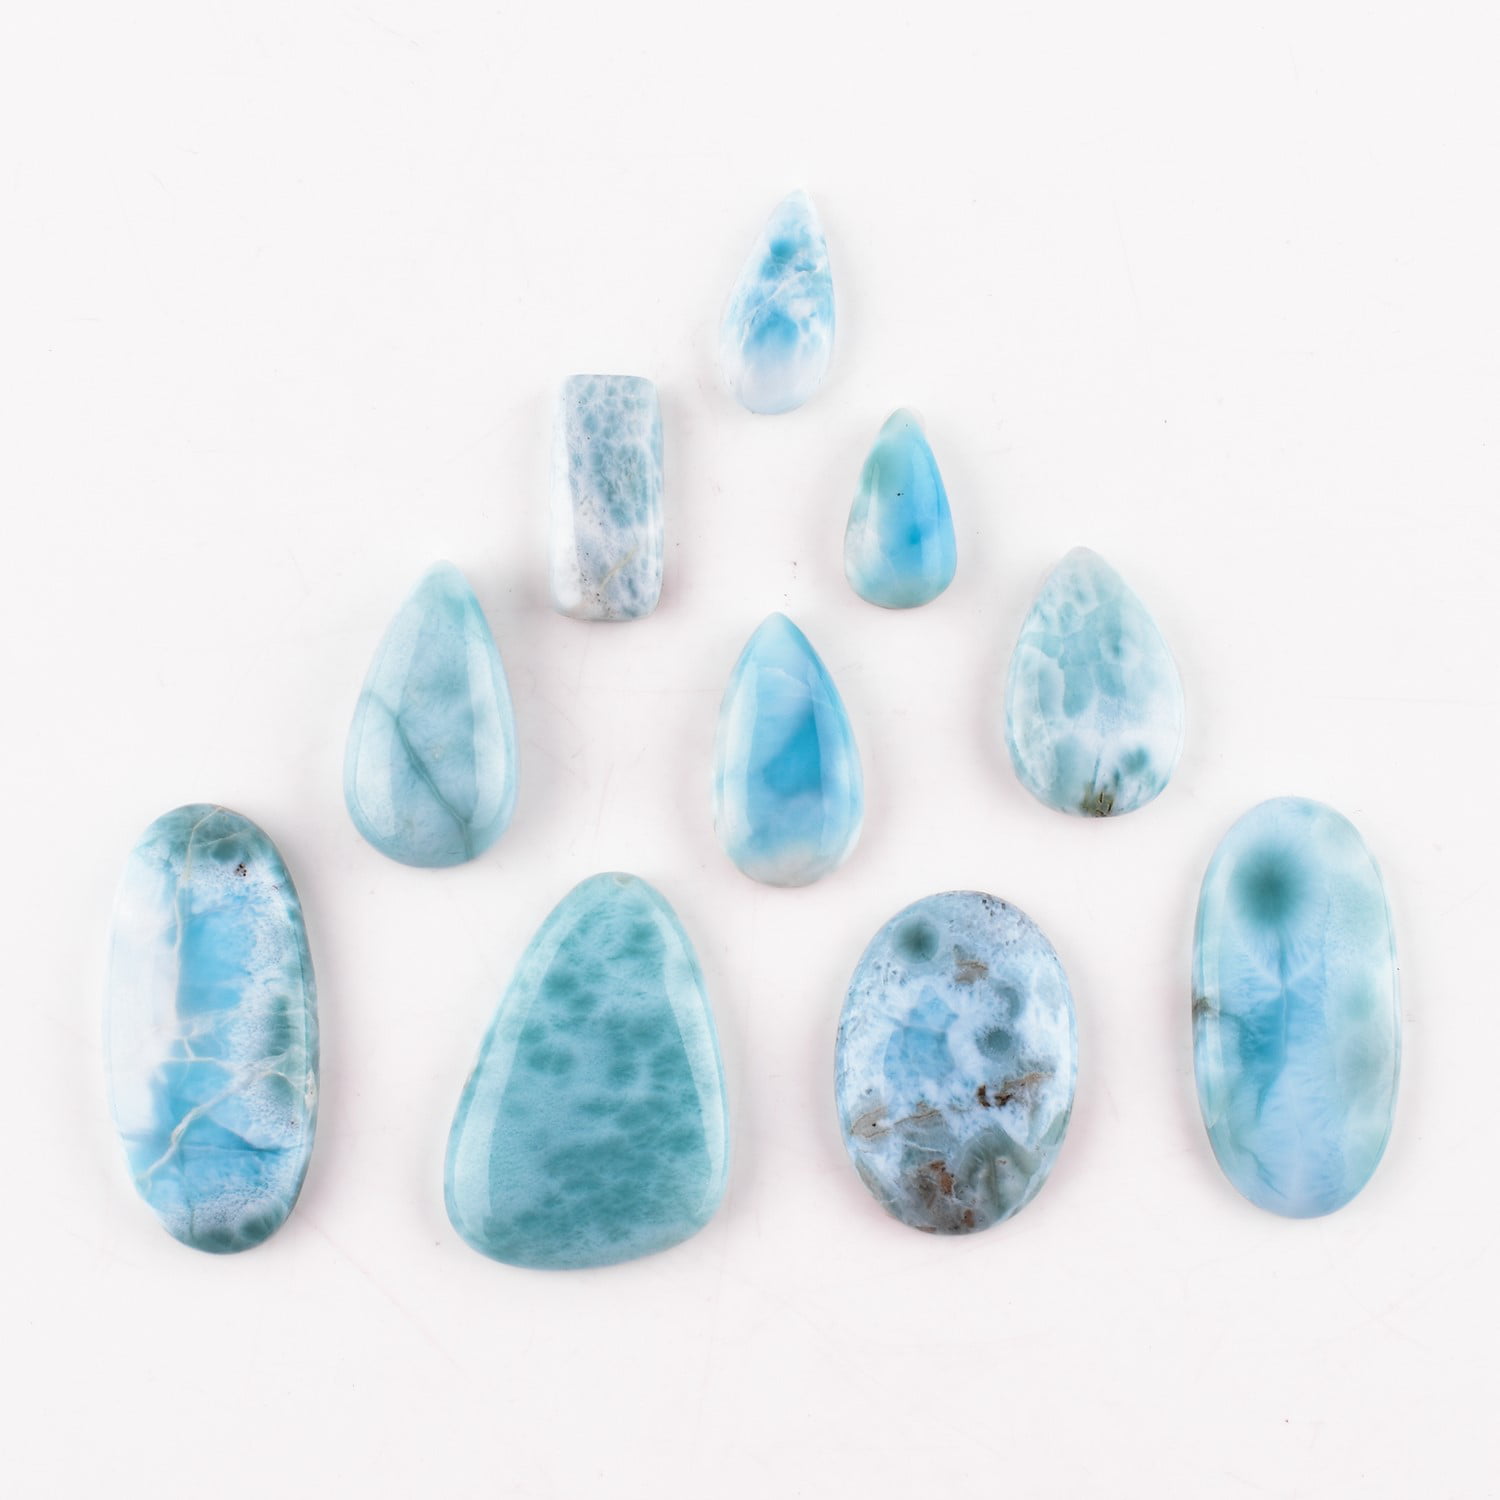 Natural Labradorite Loose Gemstone Amazing AA Blue Labradorite Cabochon DIY Wrap Pendant Jewelry Making Stone Healing Chakra Crystal